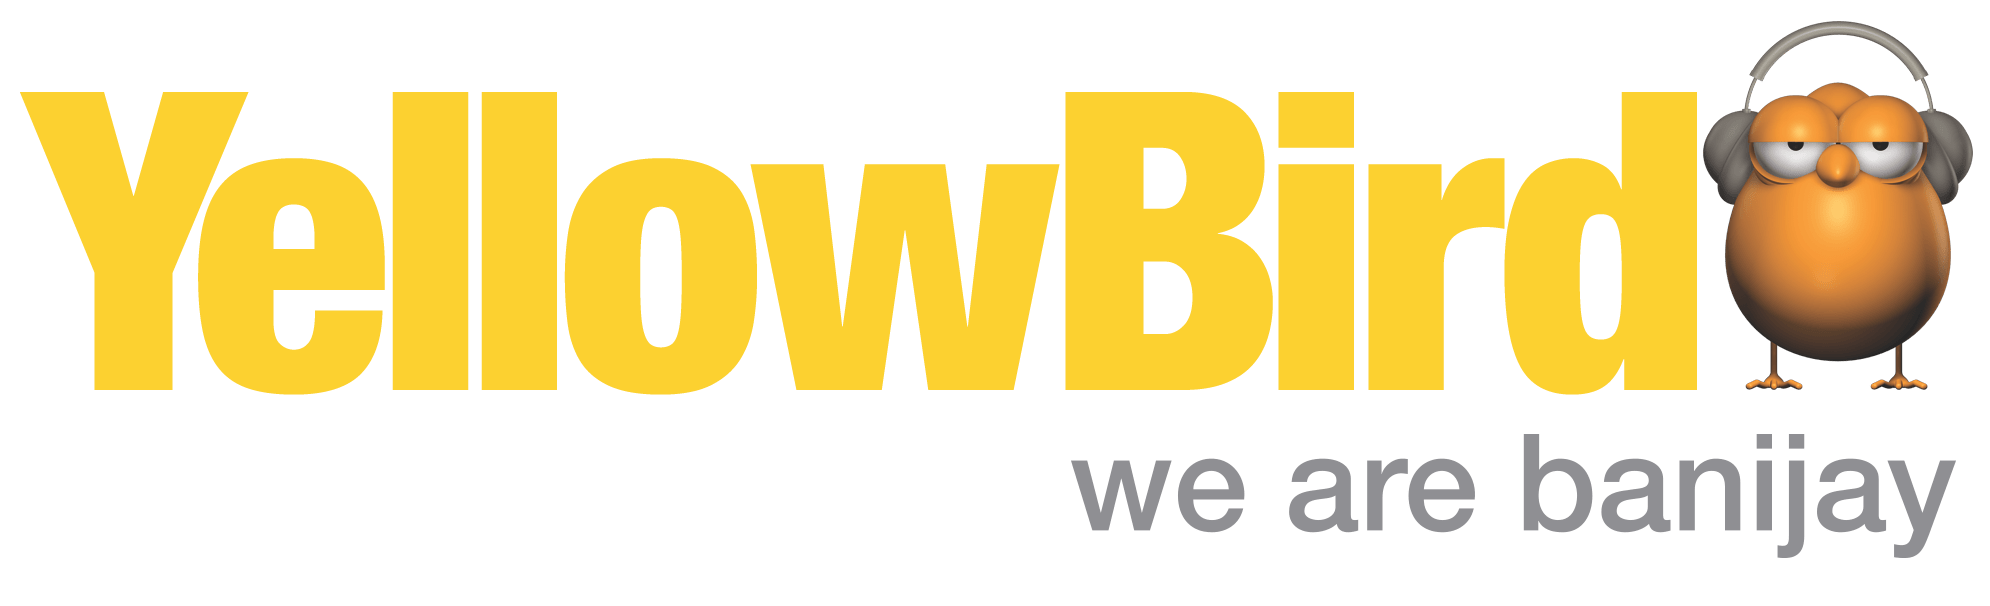 Yellow Bird Logo - Banijay's Yellow Bird lands in UK